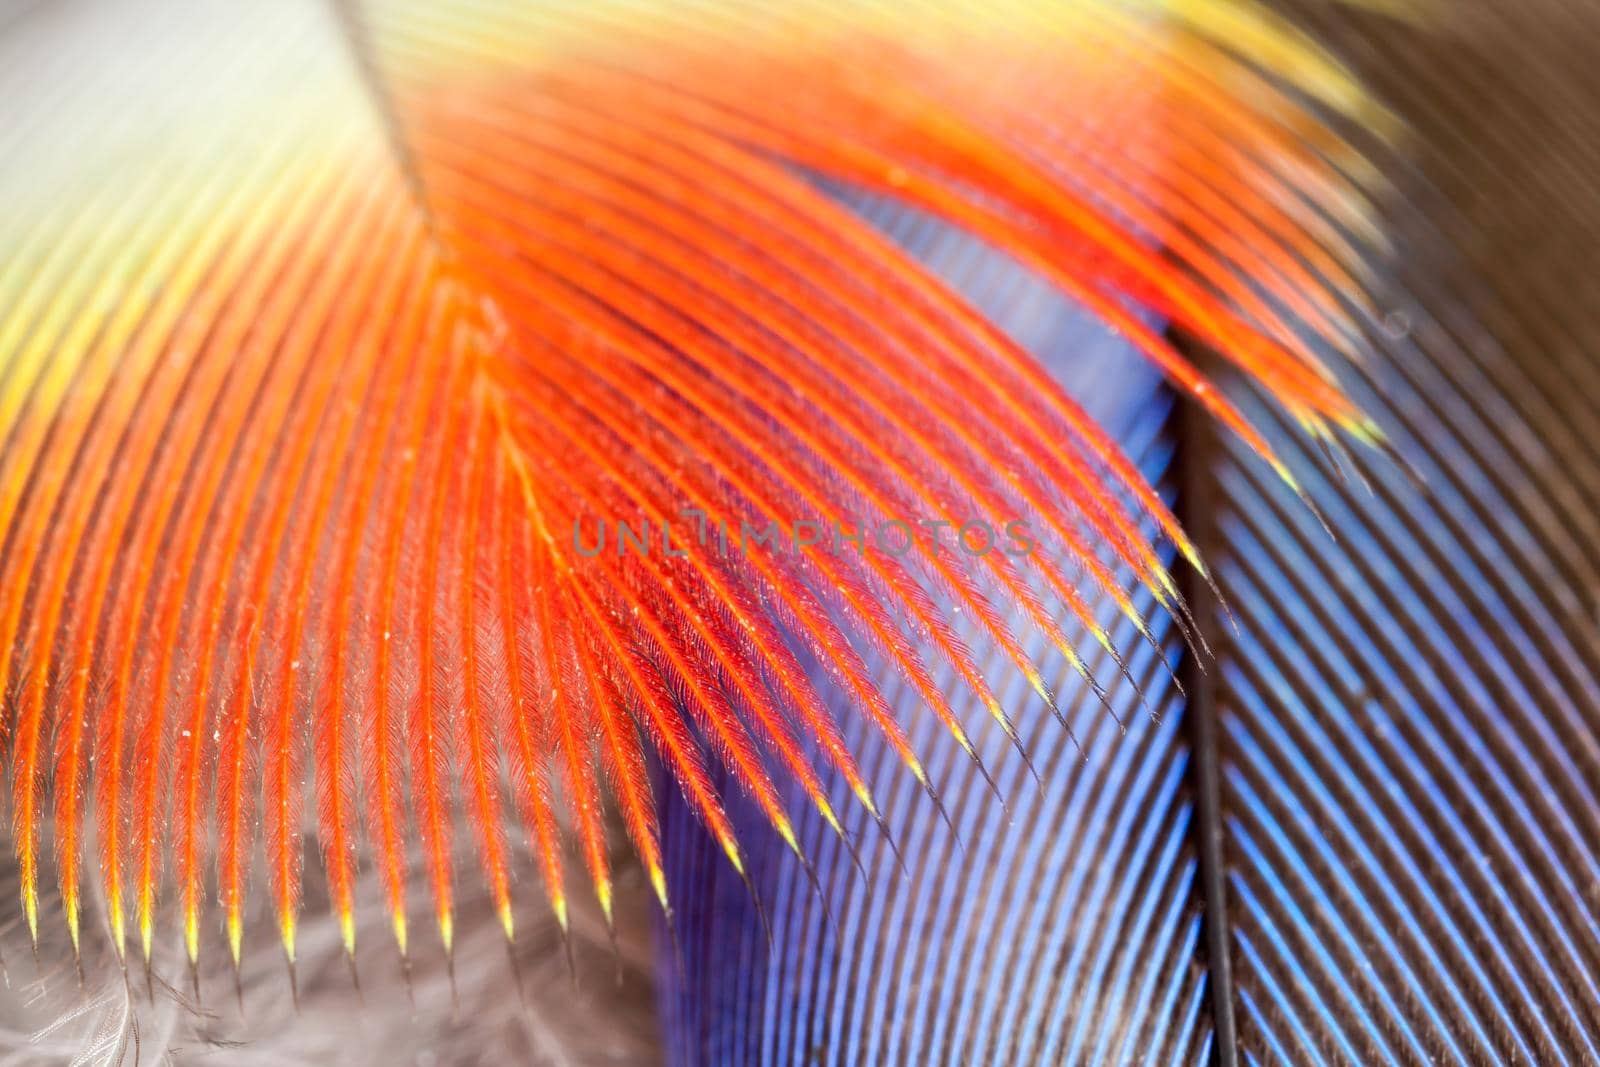 Parrot feathers by Lincikas